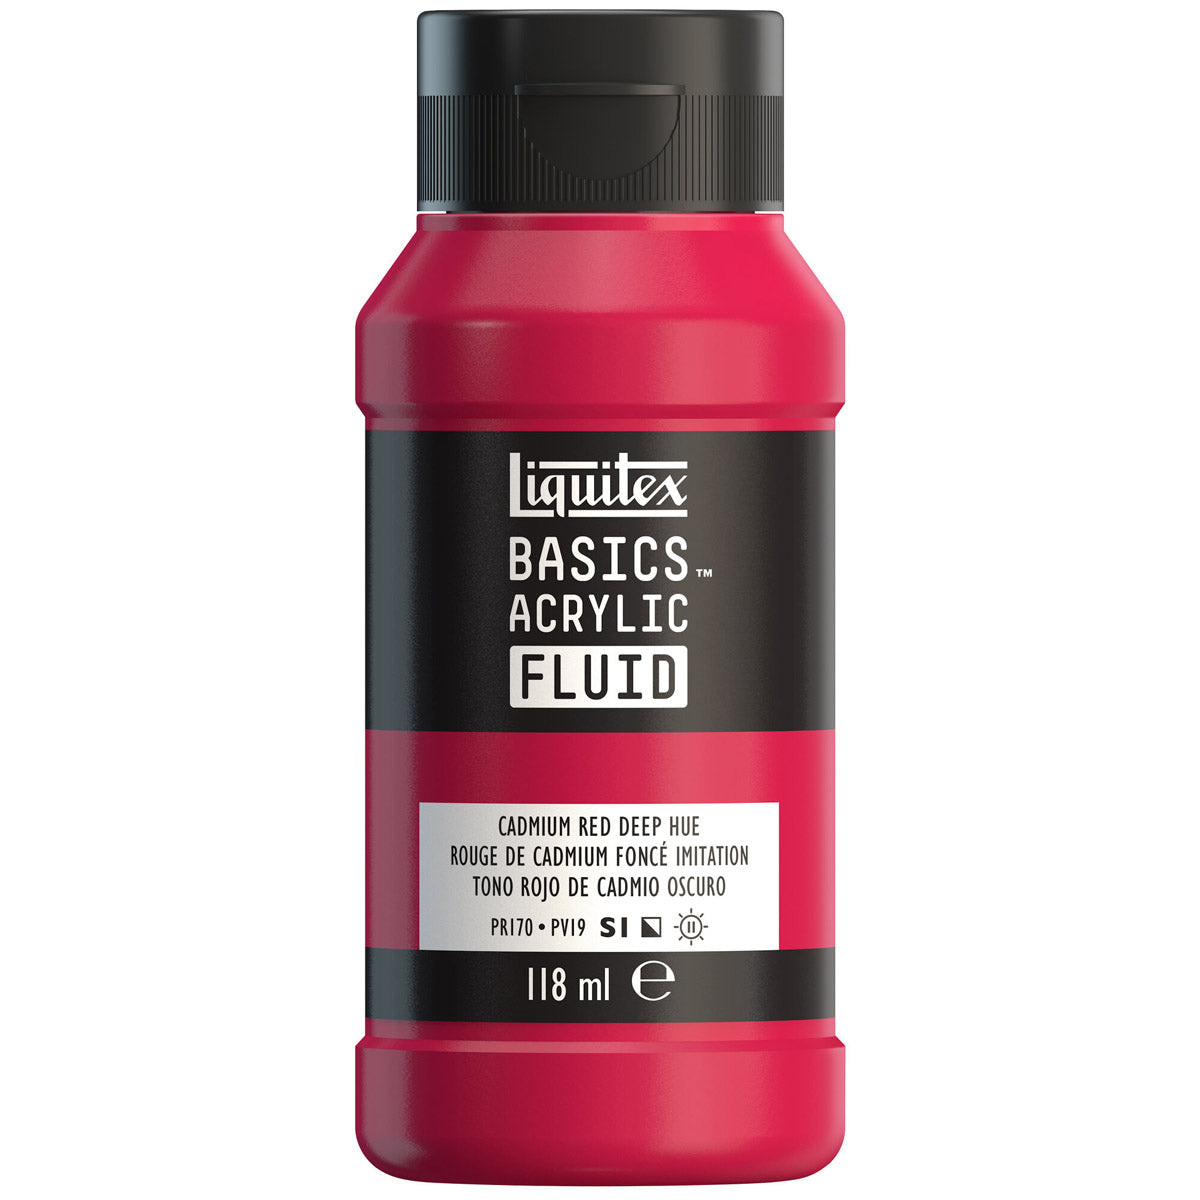 Liquitex Basics Fluid Acrylic 118ml - Cadmium Red Deep Hue S1